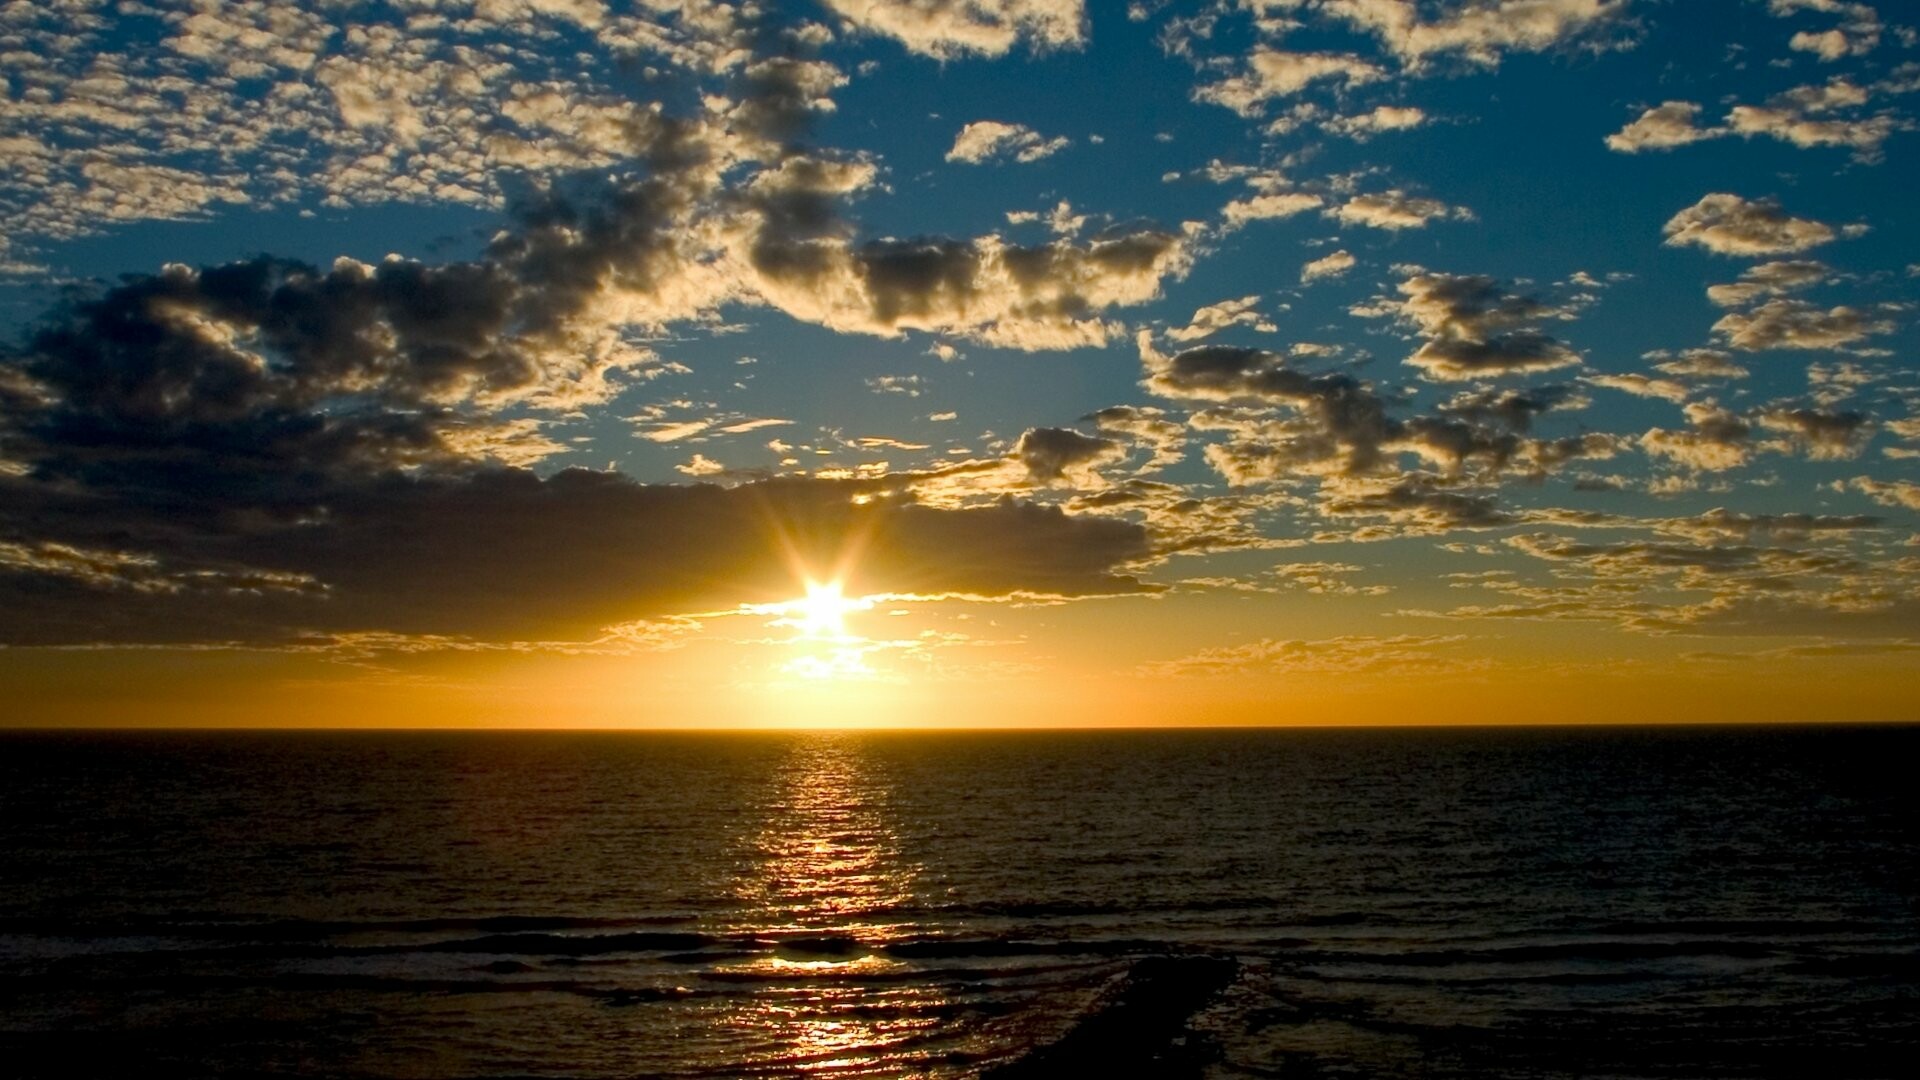 Sunrise: The morning twilight, The sun breaking through a dark-bottomed cloud. 1920x1080 Full HD Wallpaper.